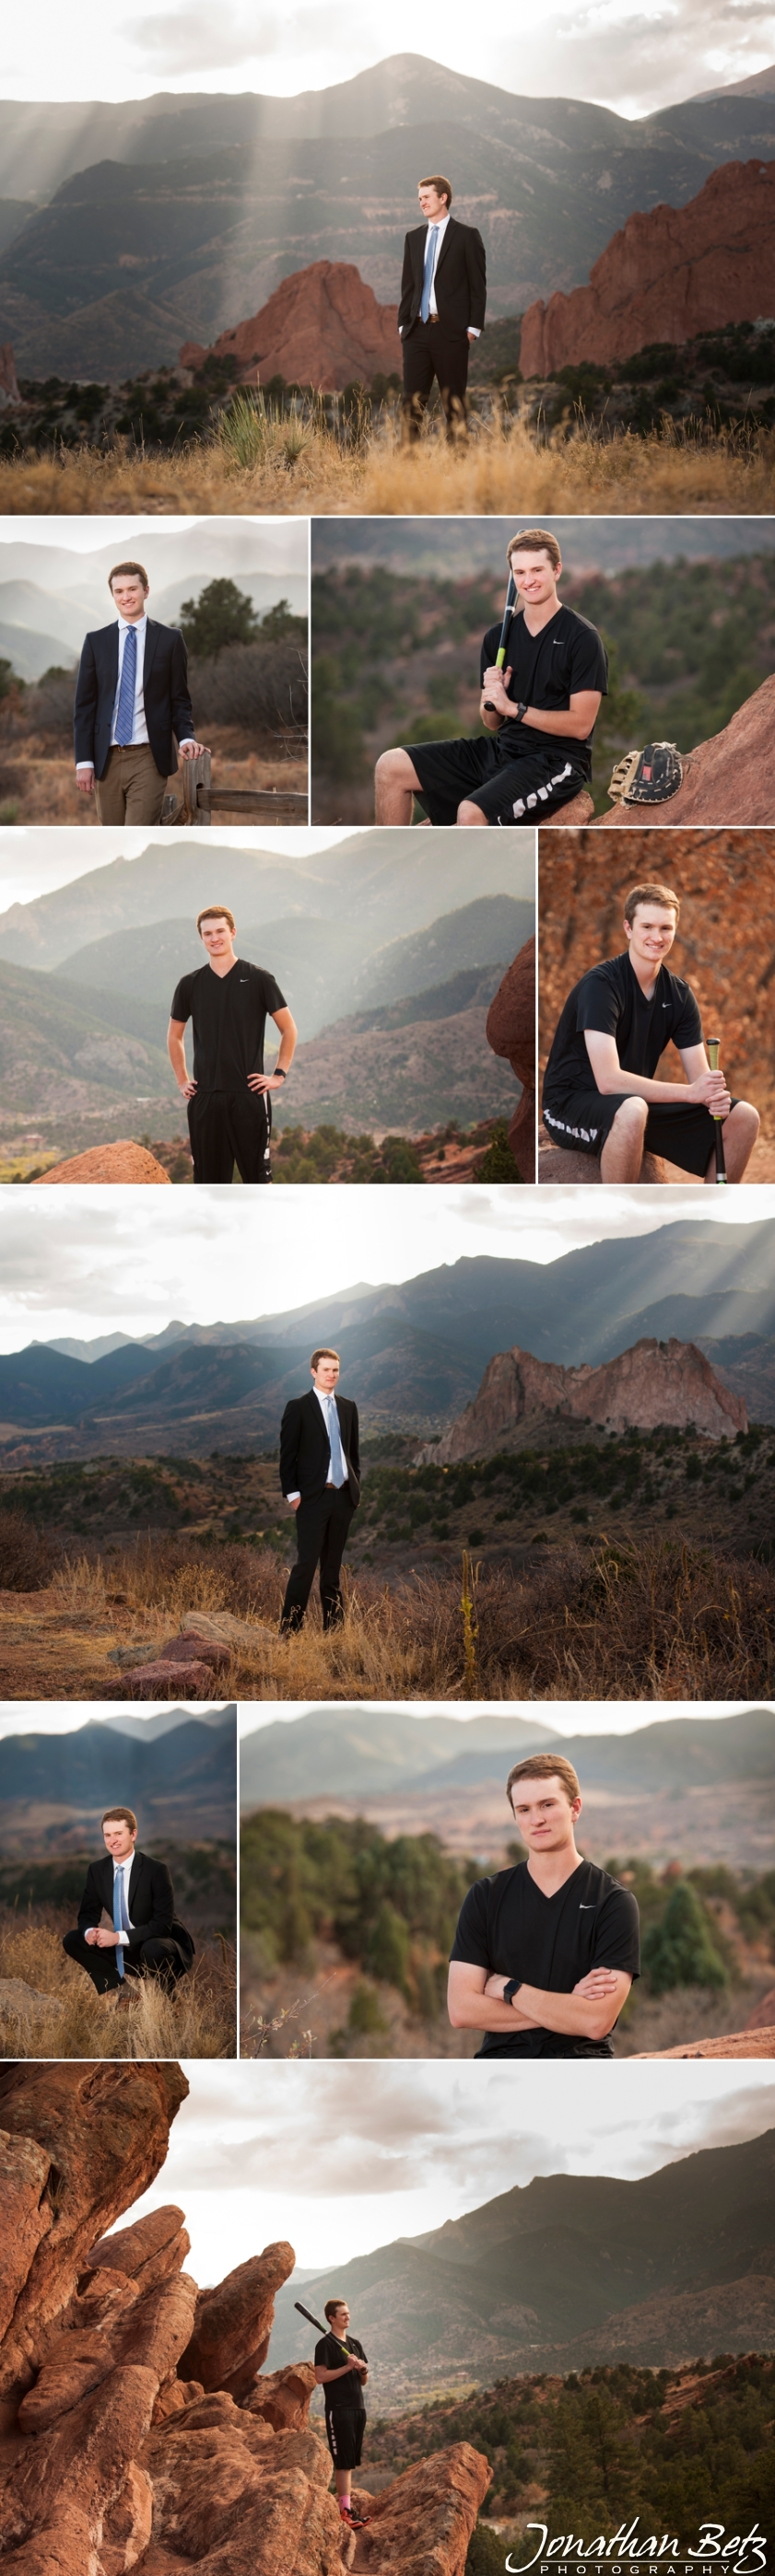 Colorado Springs and Woodland Park High School Senior Photographer Jonathan Betz Photography